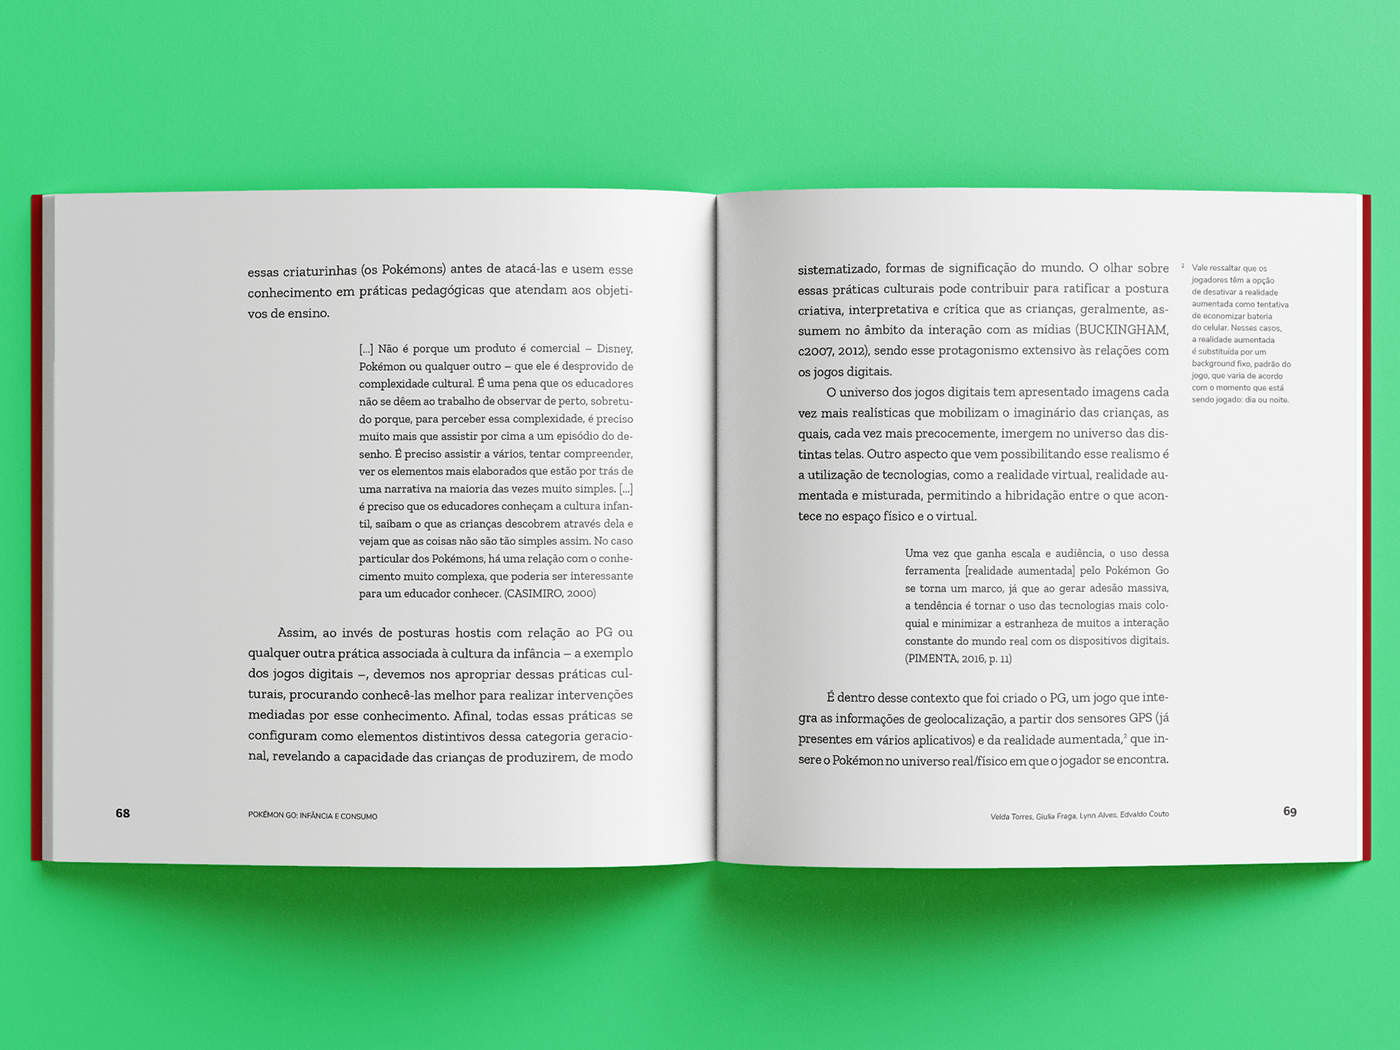 book cover book design editorial design  graphic design  typography  